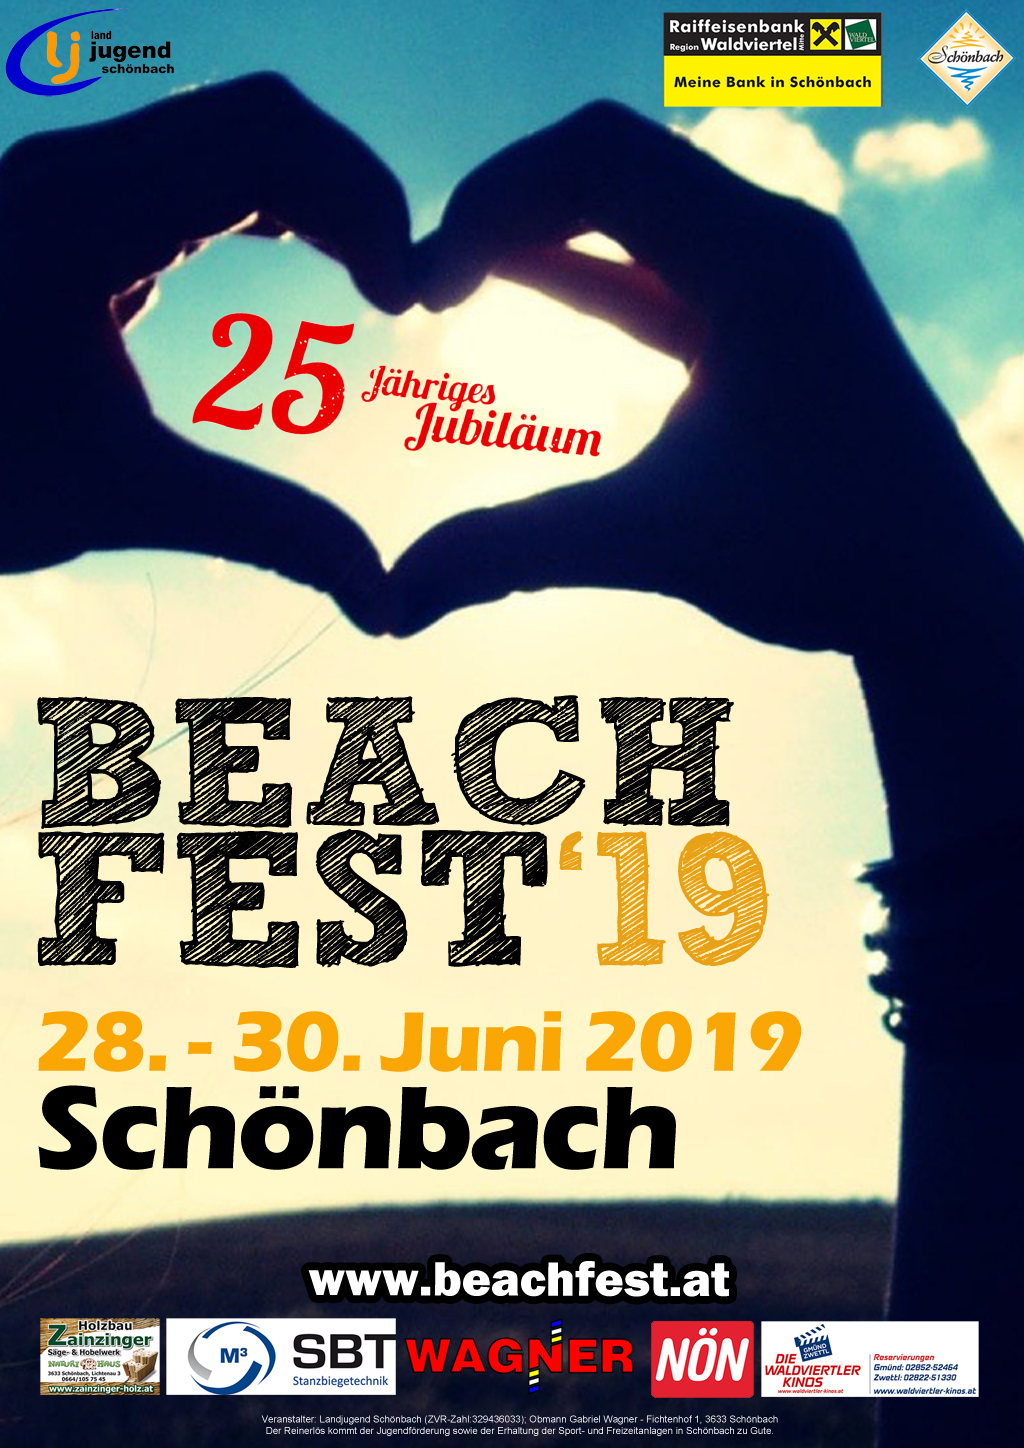 Beachfest 2019